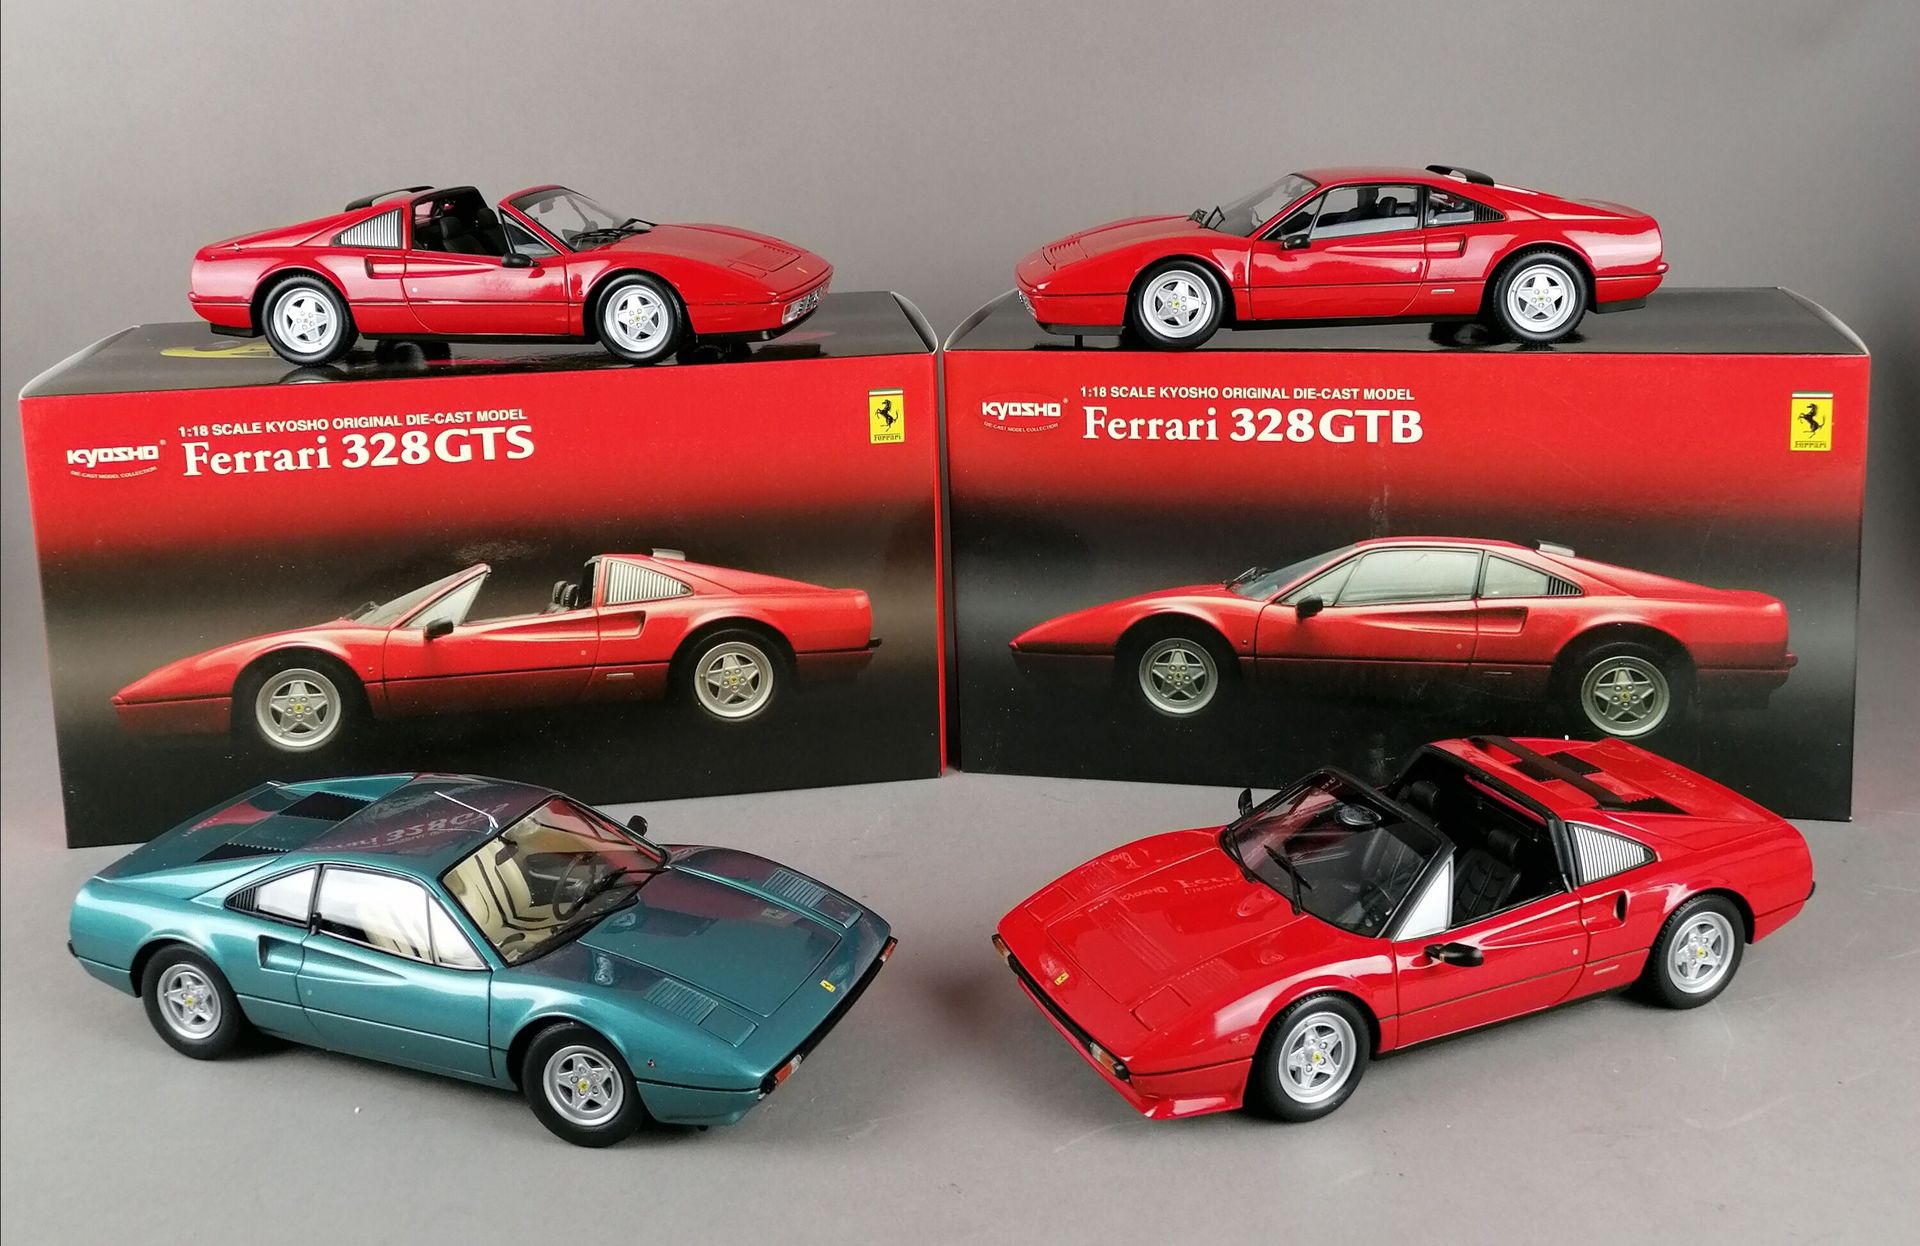 Null KYOSHO - FOUR Ferrari im Maßstab 1:18:

1x 328 GTS

1x 328 GTB

1x 308 GTS &hellip;